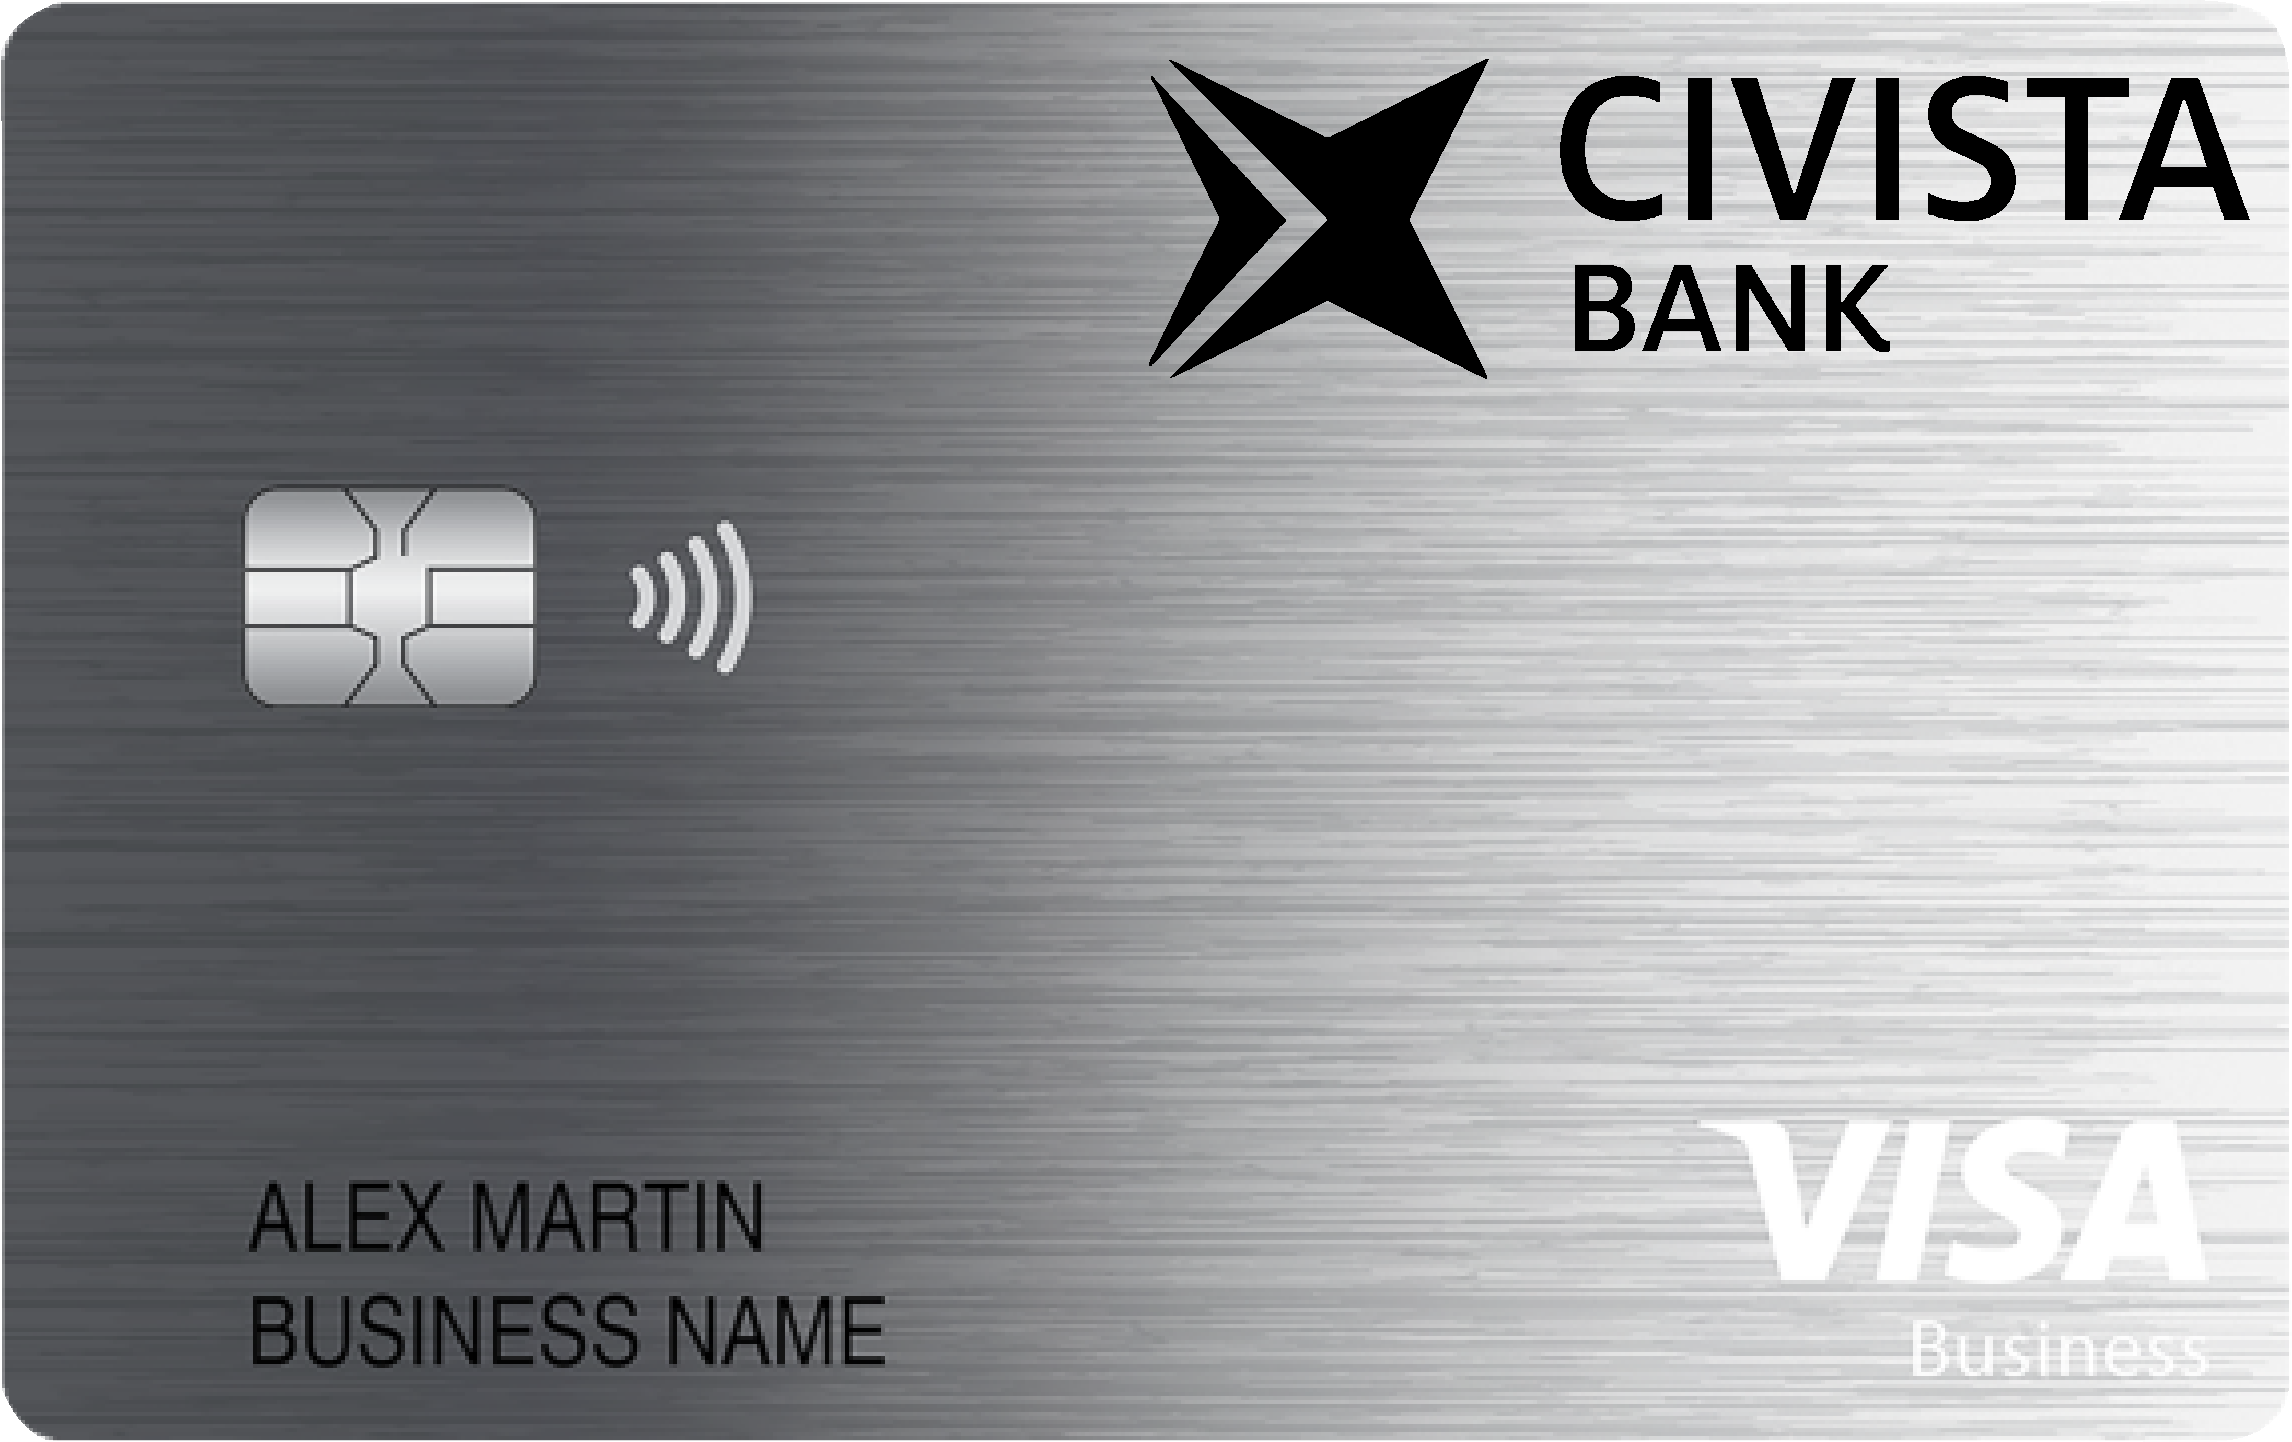 Civista Bank Business Cash Preferred Card